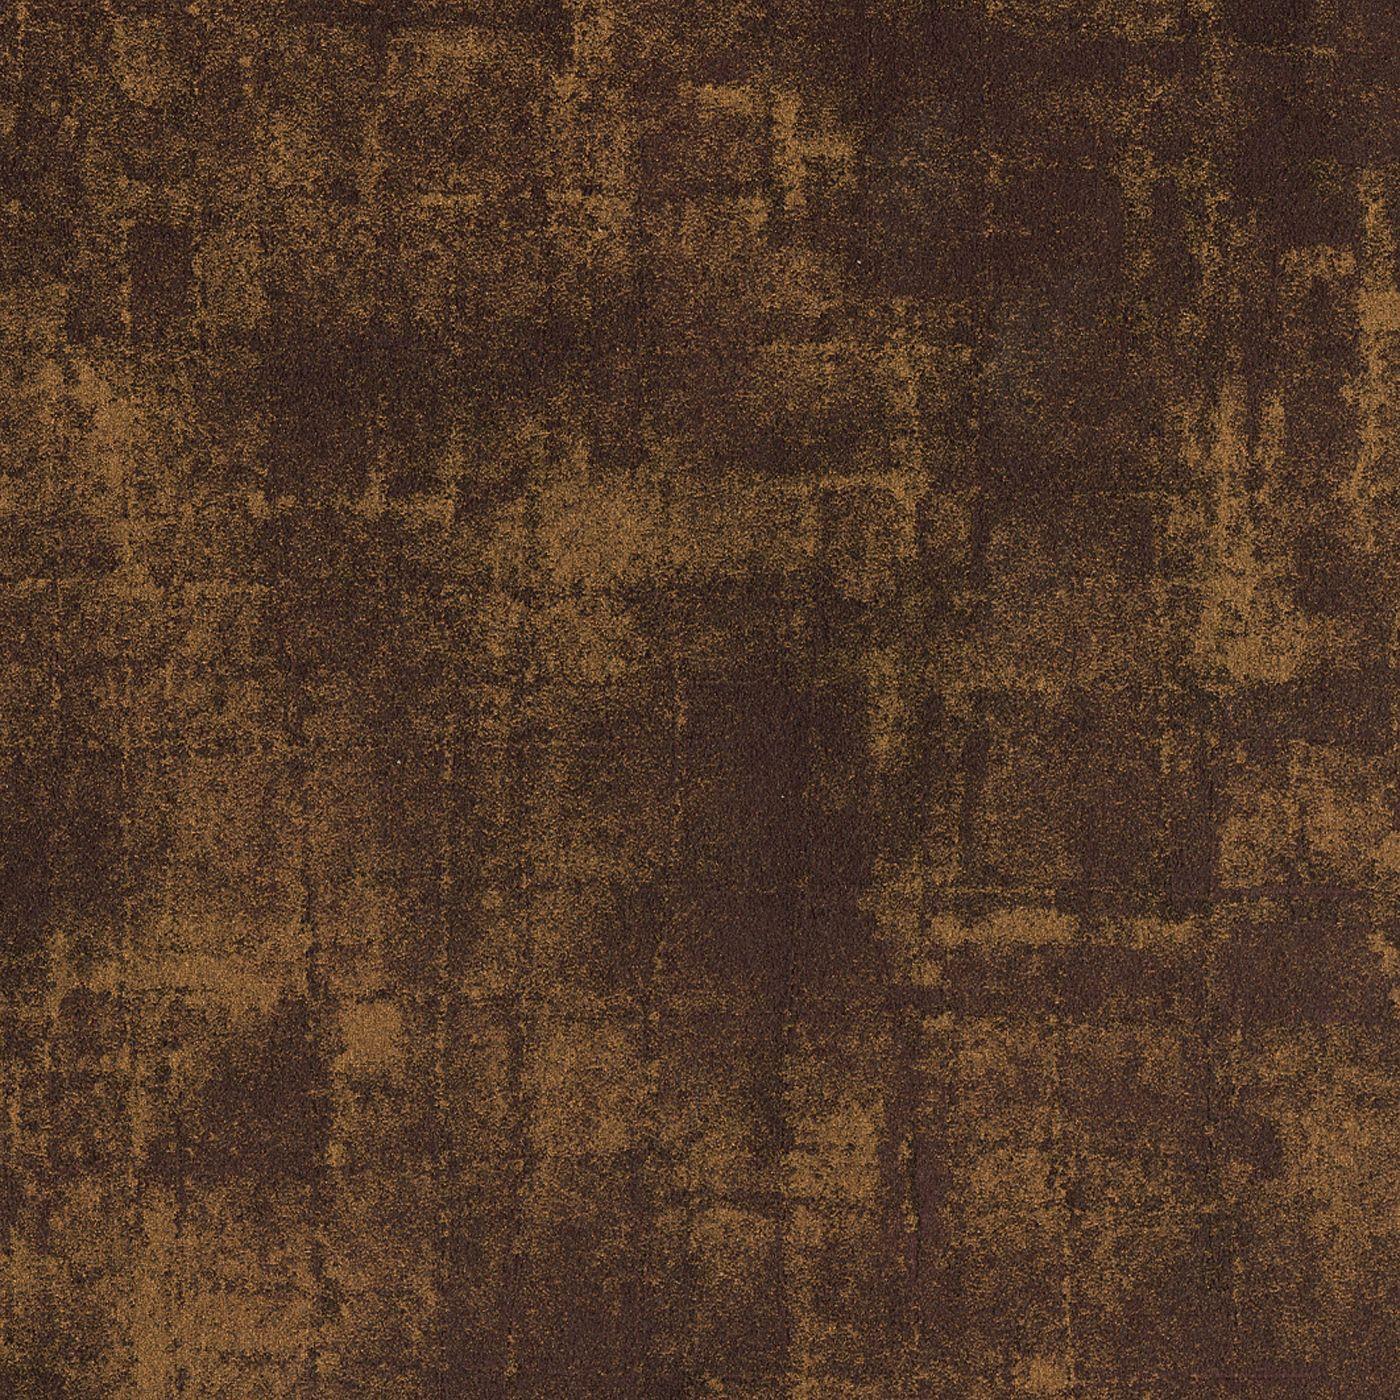 800x597px Bronze wallpaper for desk